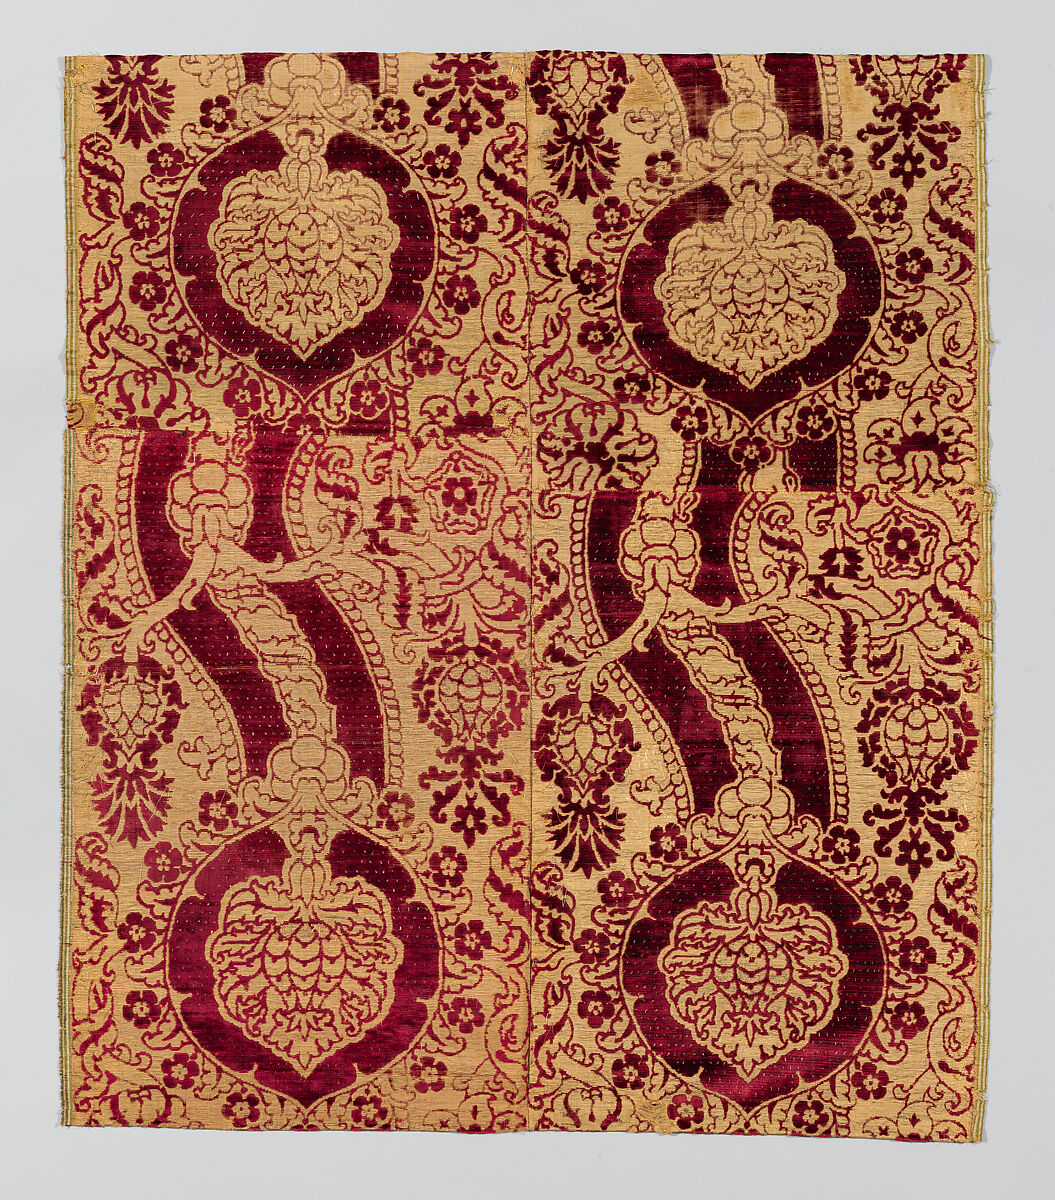 Panel of velvet, Silk and metal thread, Italian or Spanish